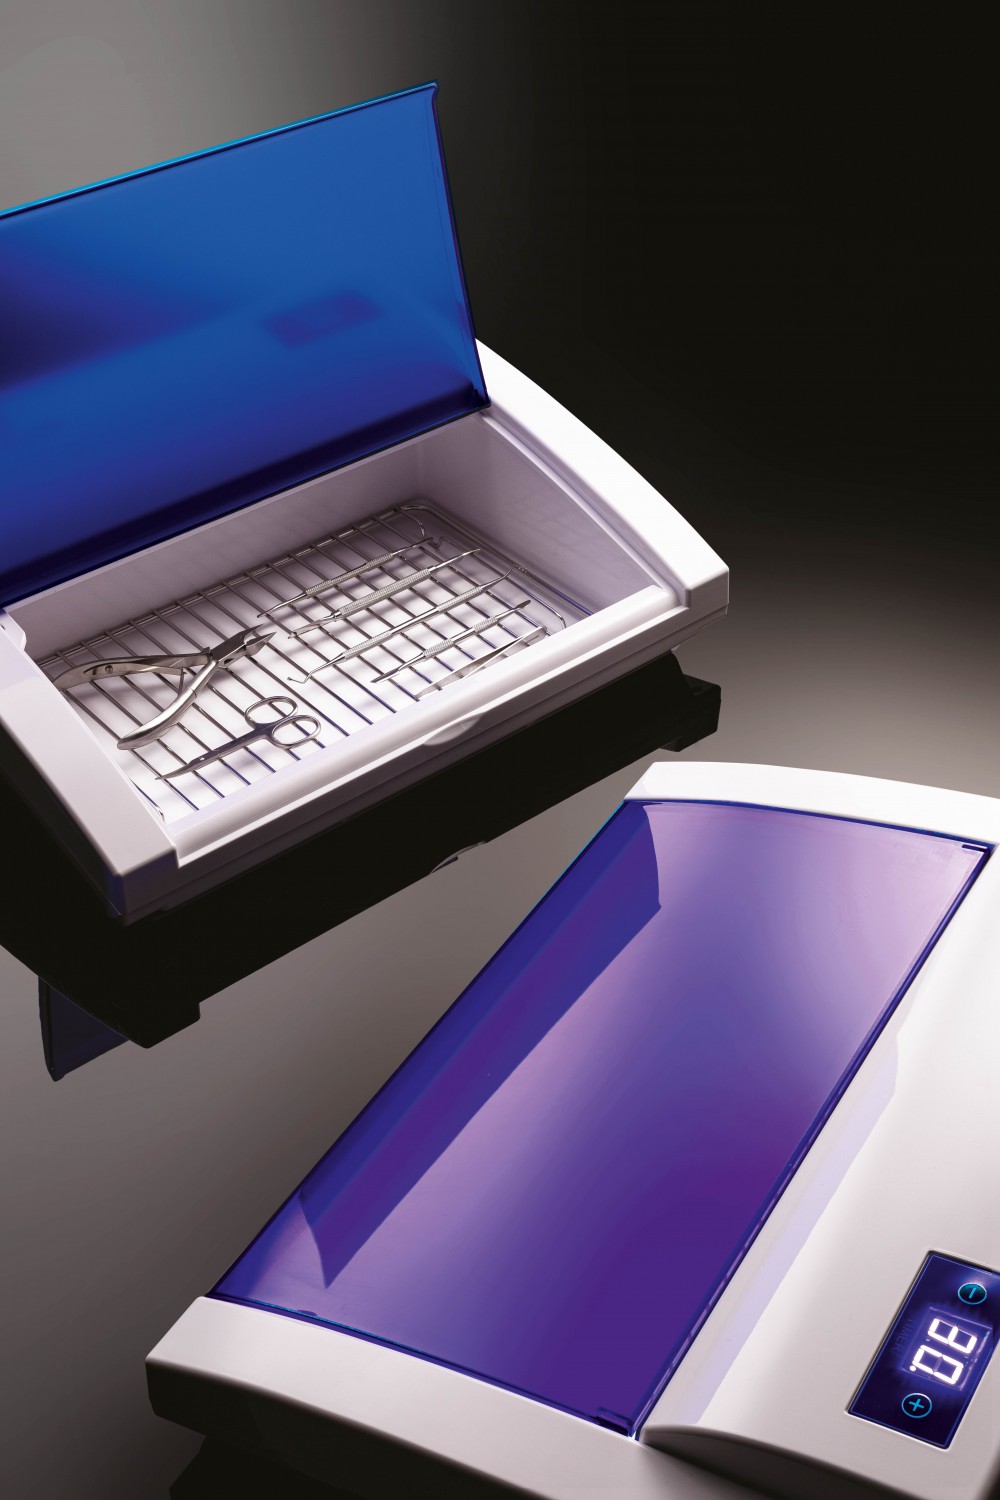  XanitaliaPro Steril pro UV-Sterilisator für Schönheitssalons 